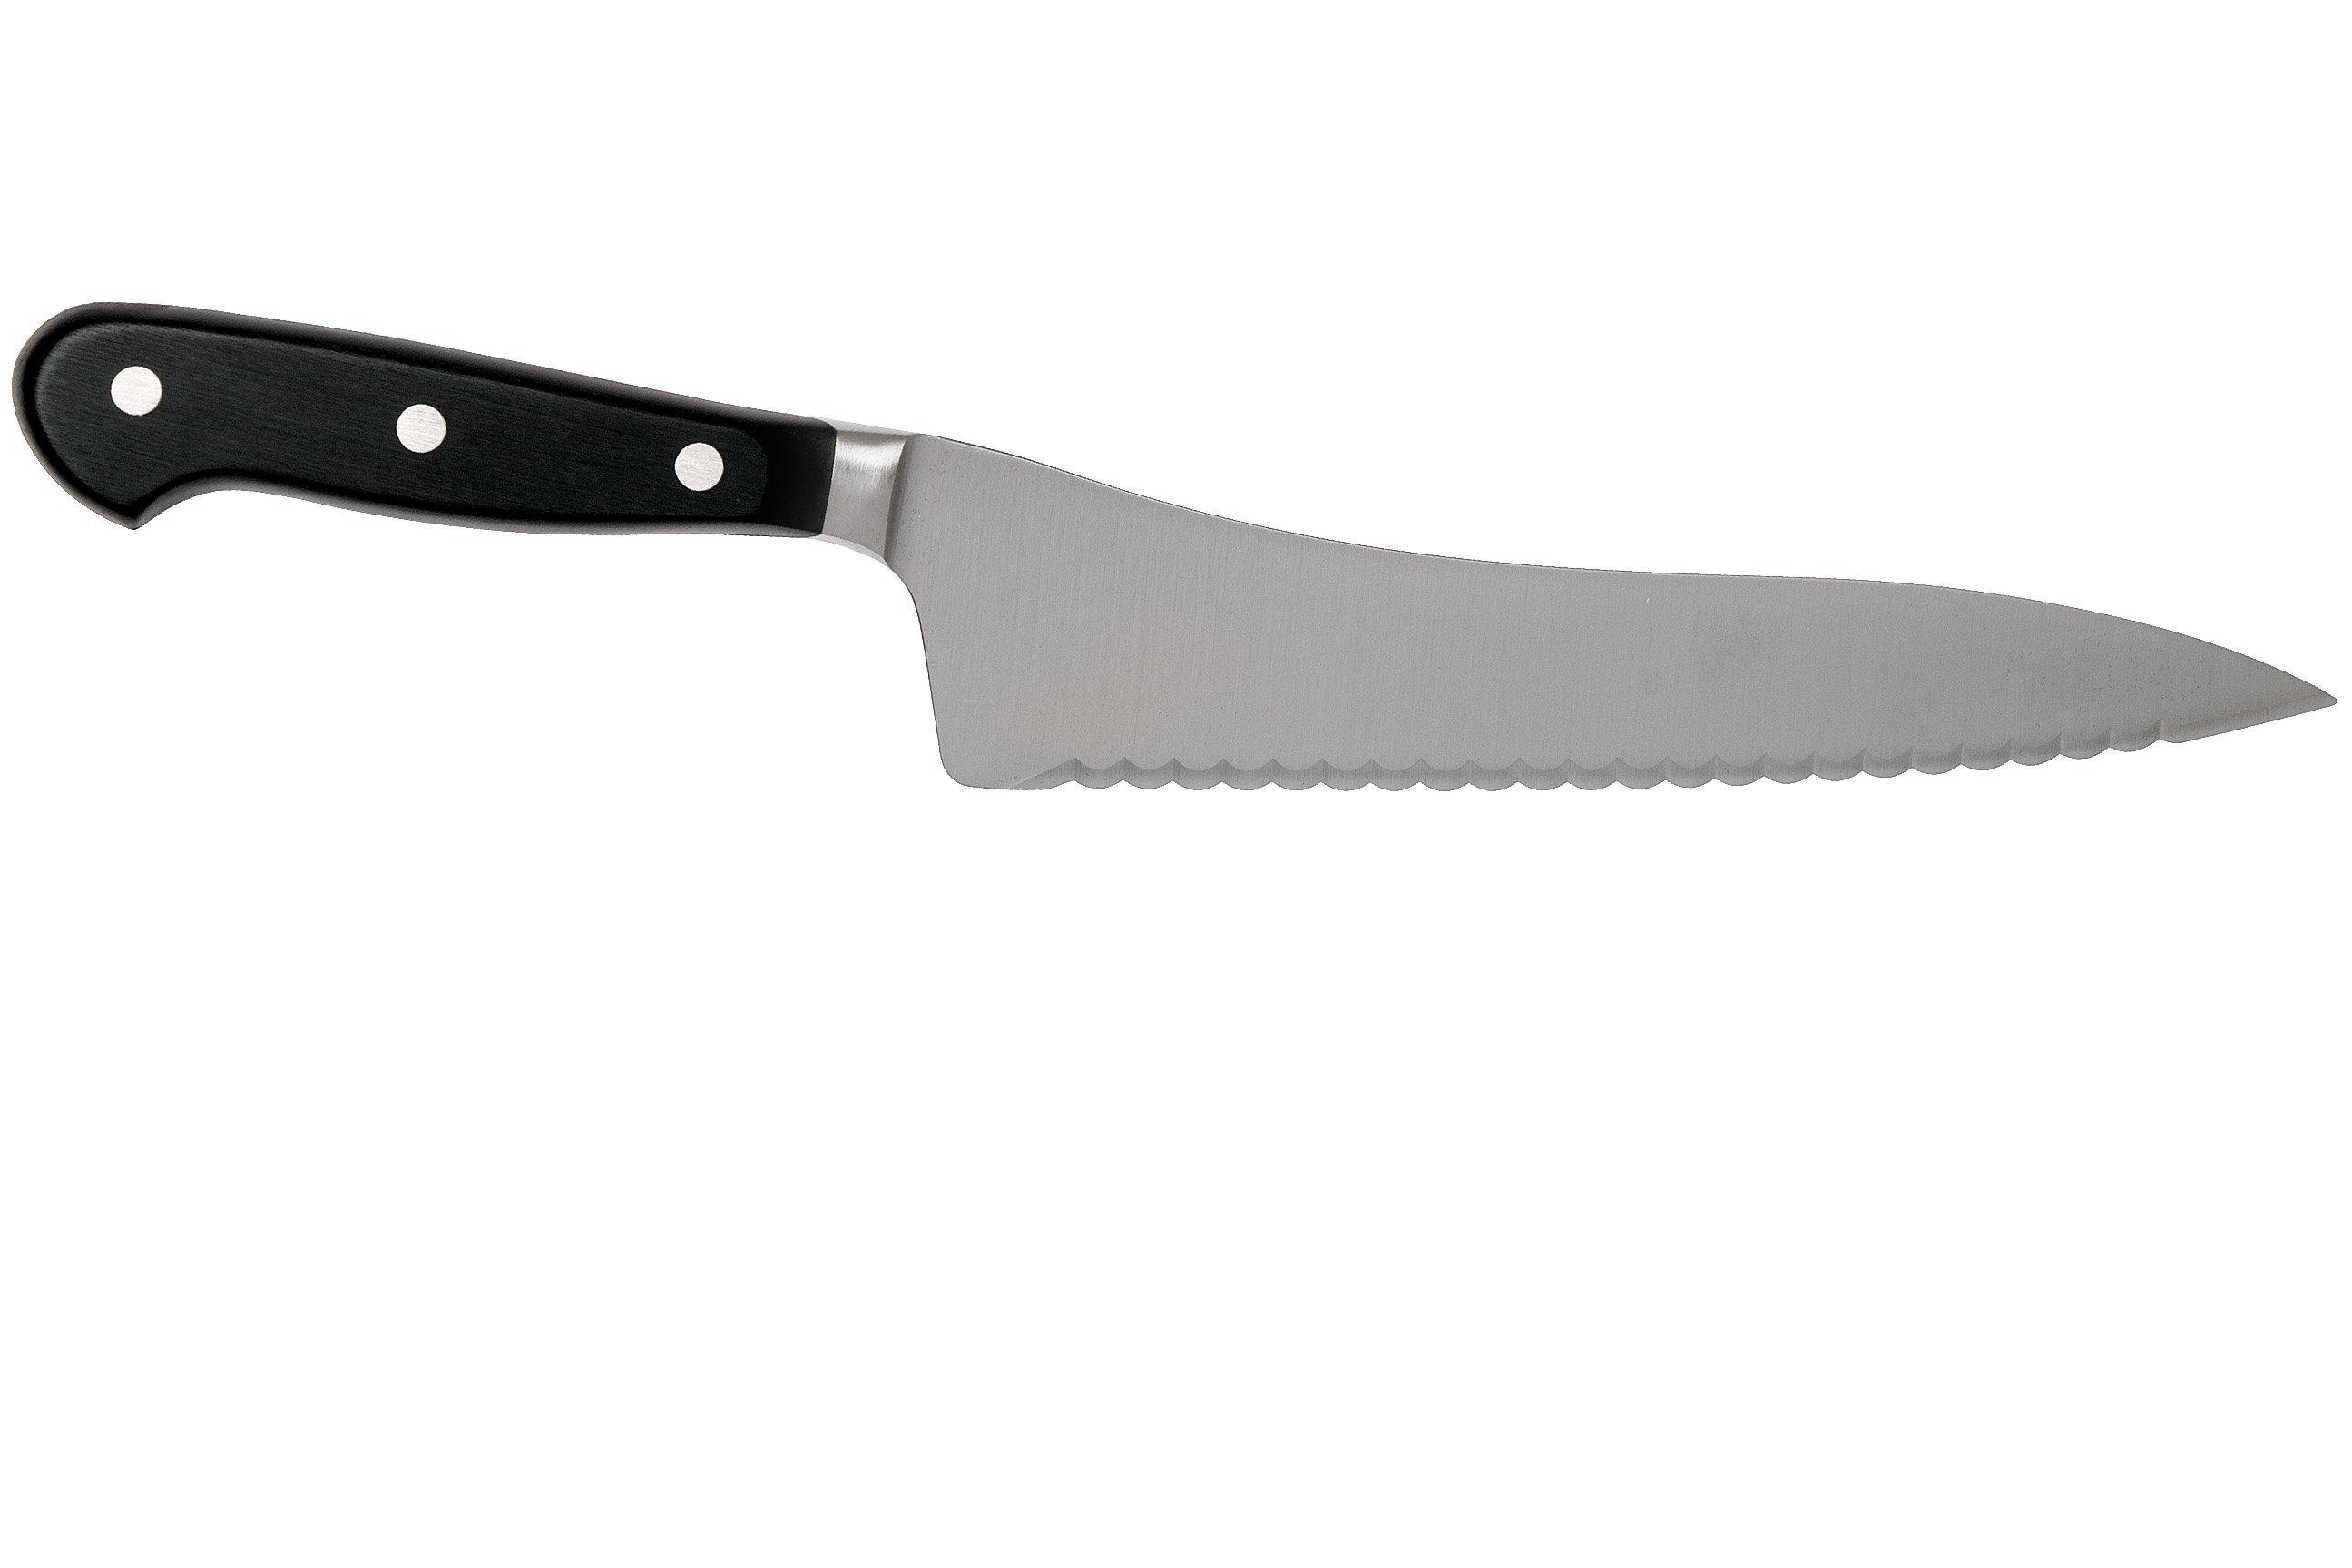 Wüsthof Classic Deli knife 20 cm, 4128 | Advantageously shopping